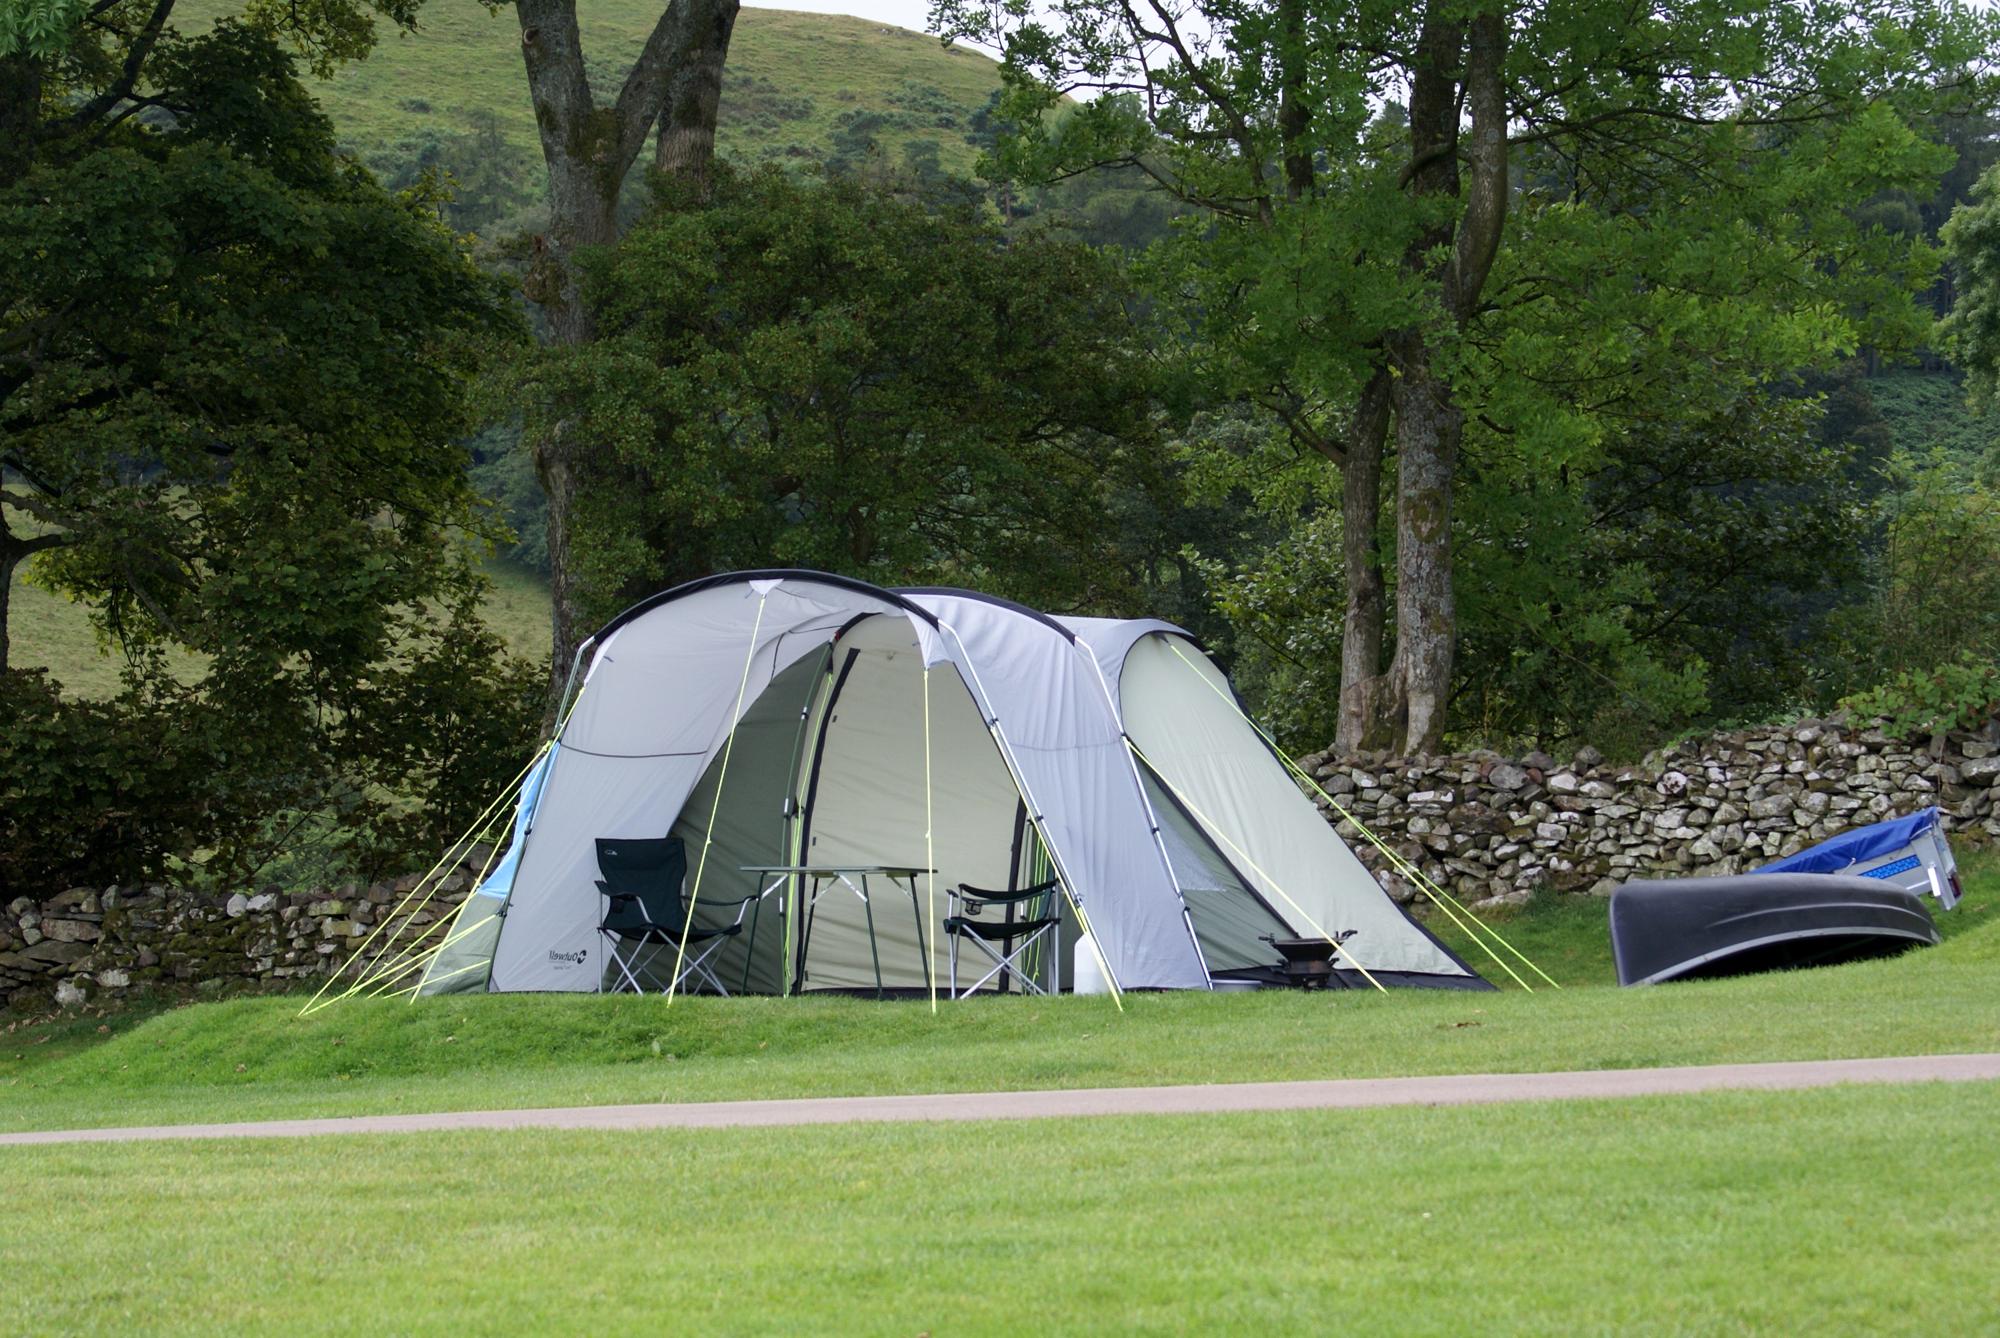 Pooley Bridge Camping – Campsites near Pooley Bridge, Lake District